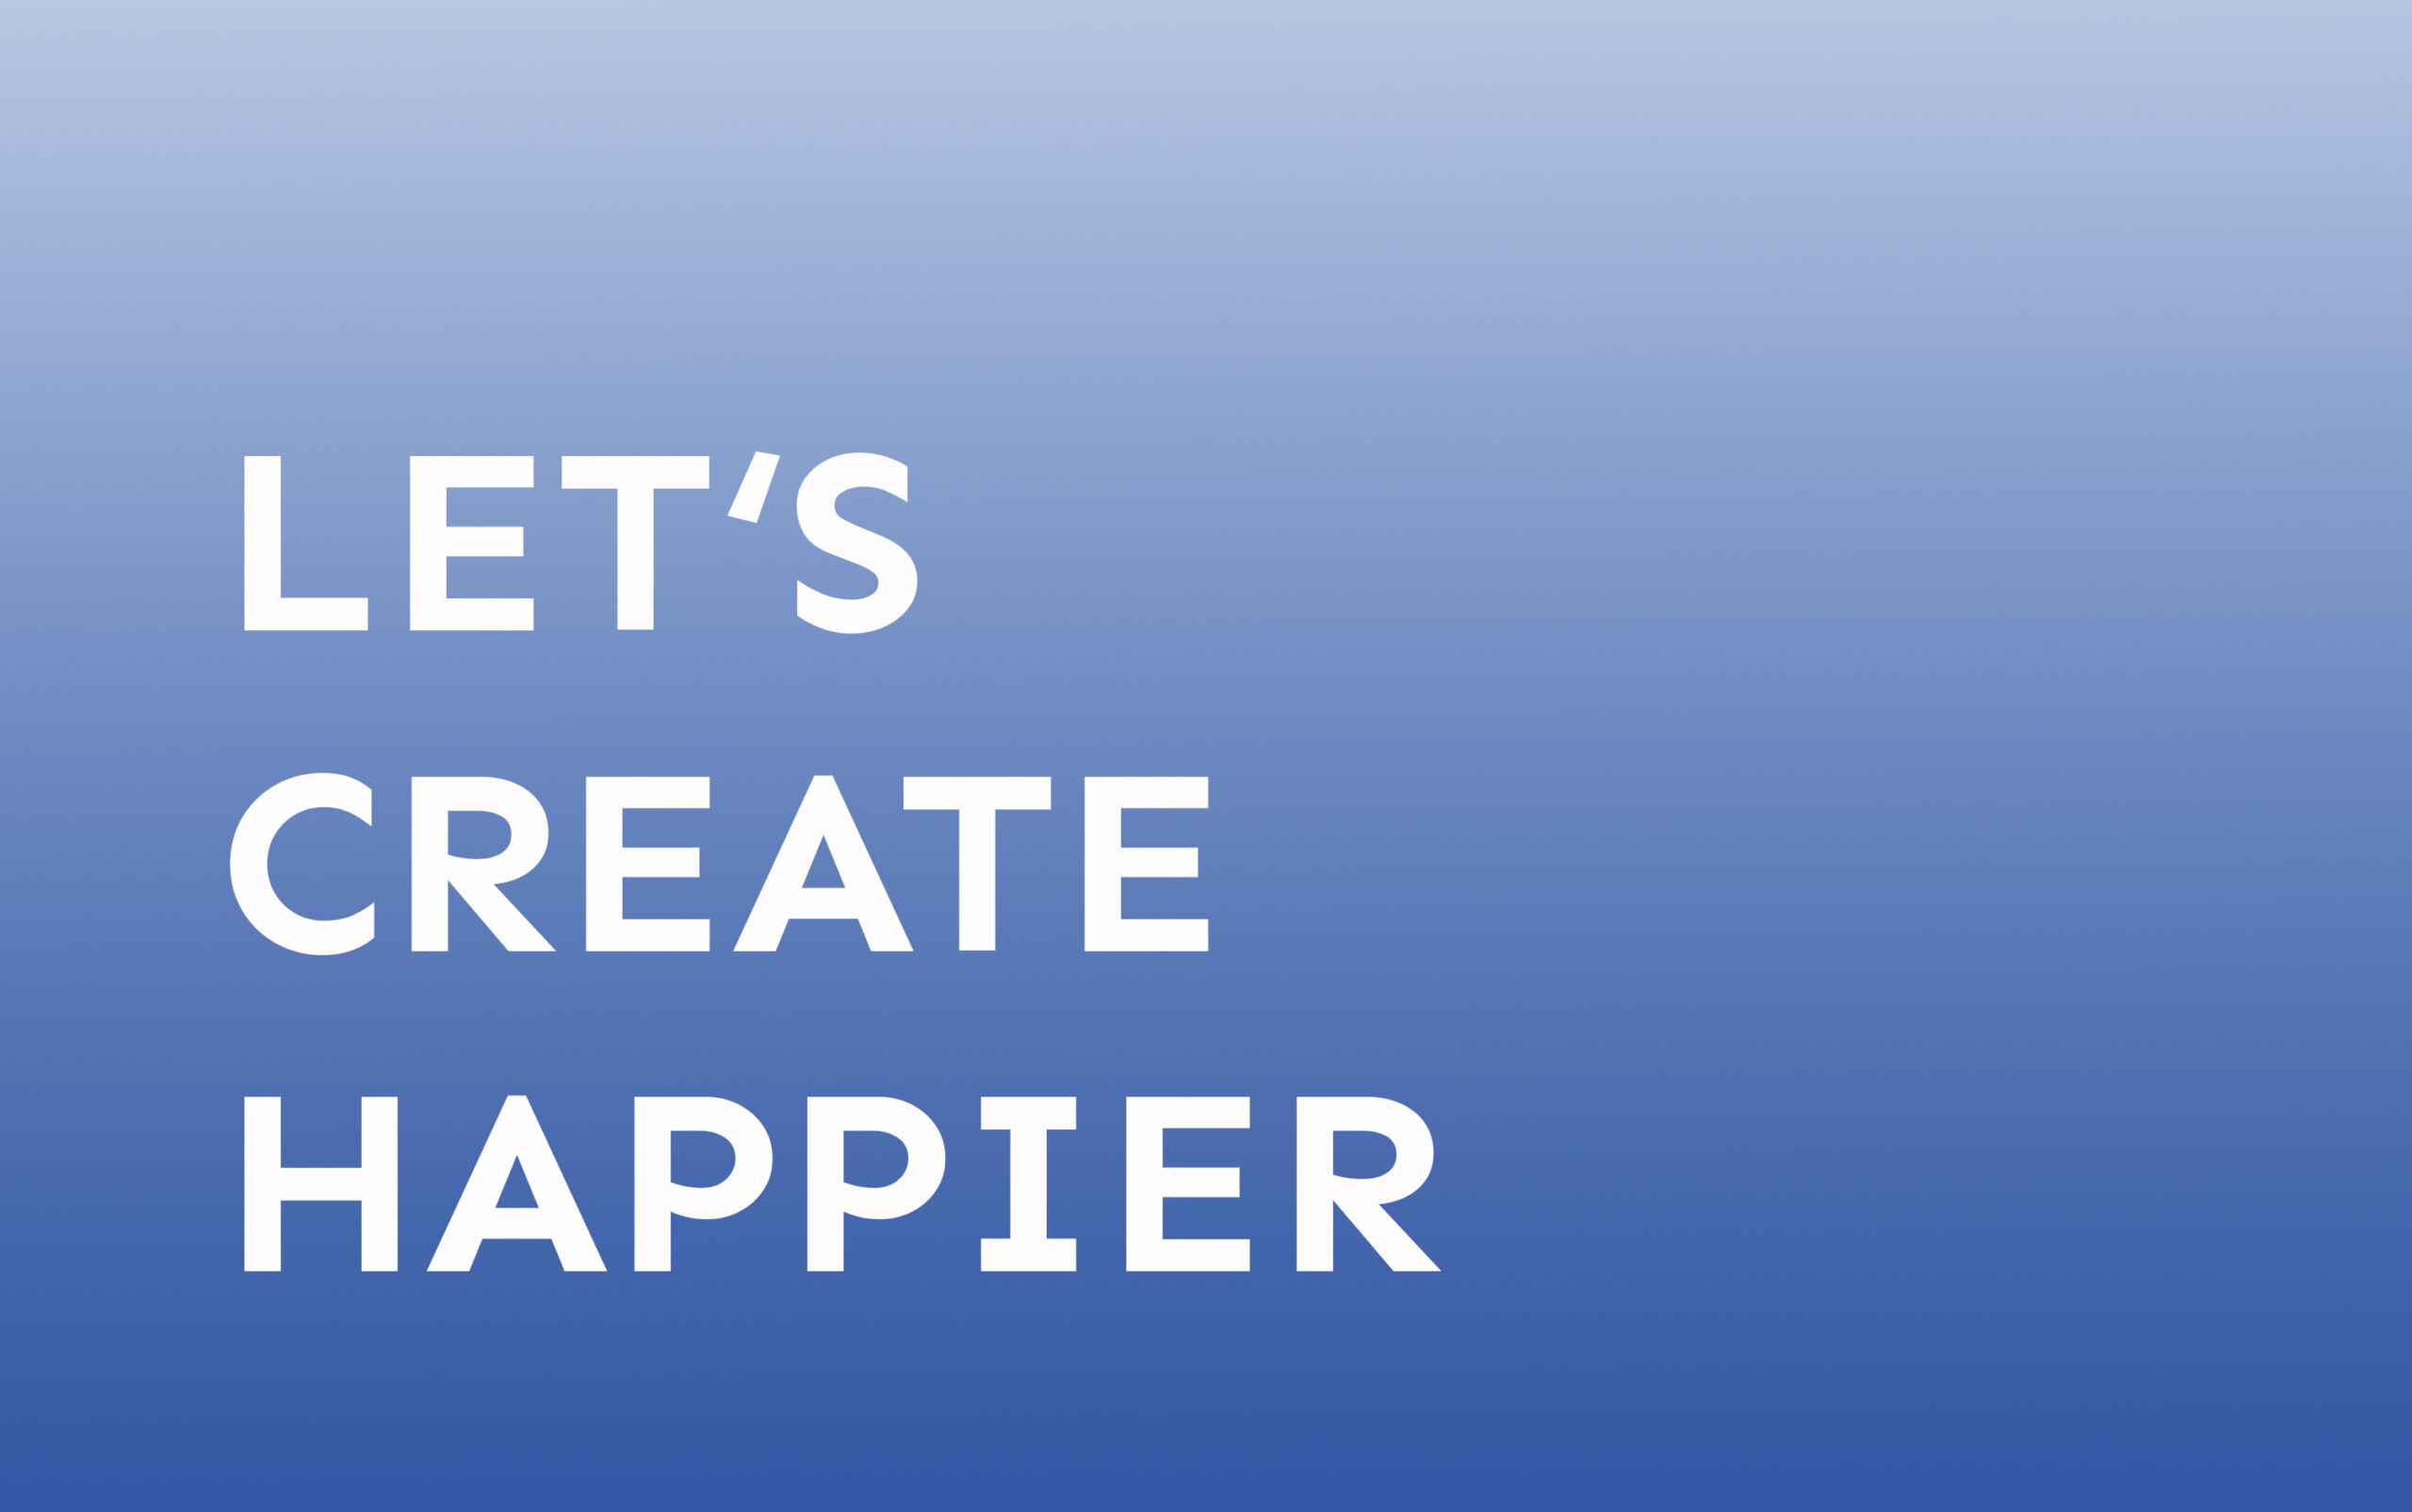 Let’s create happier!